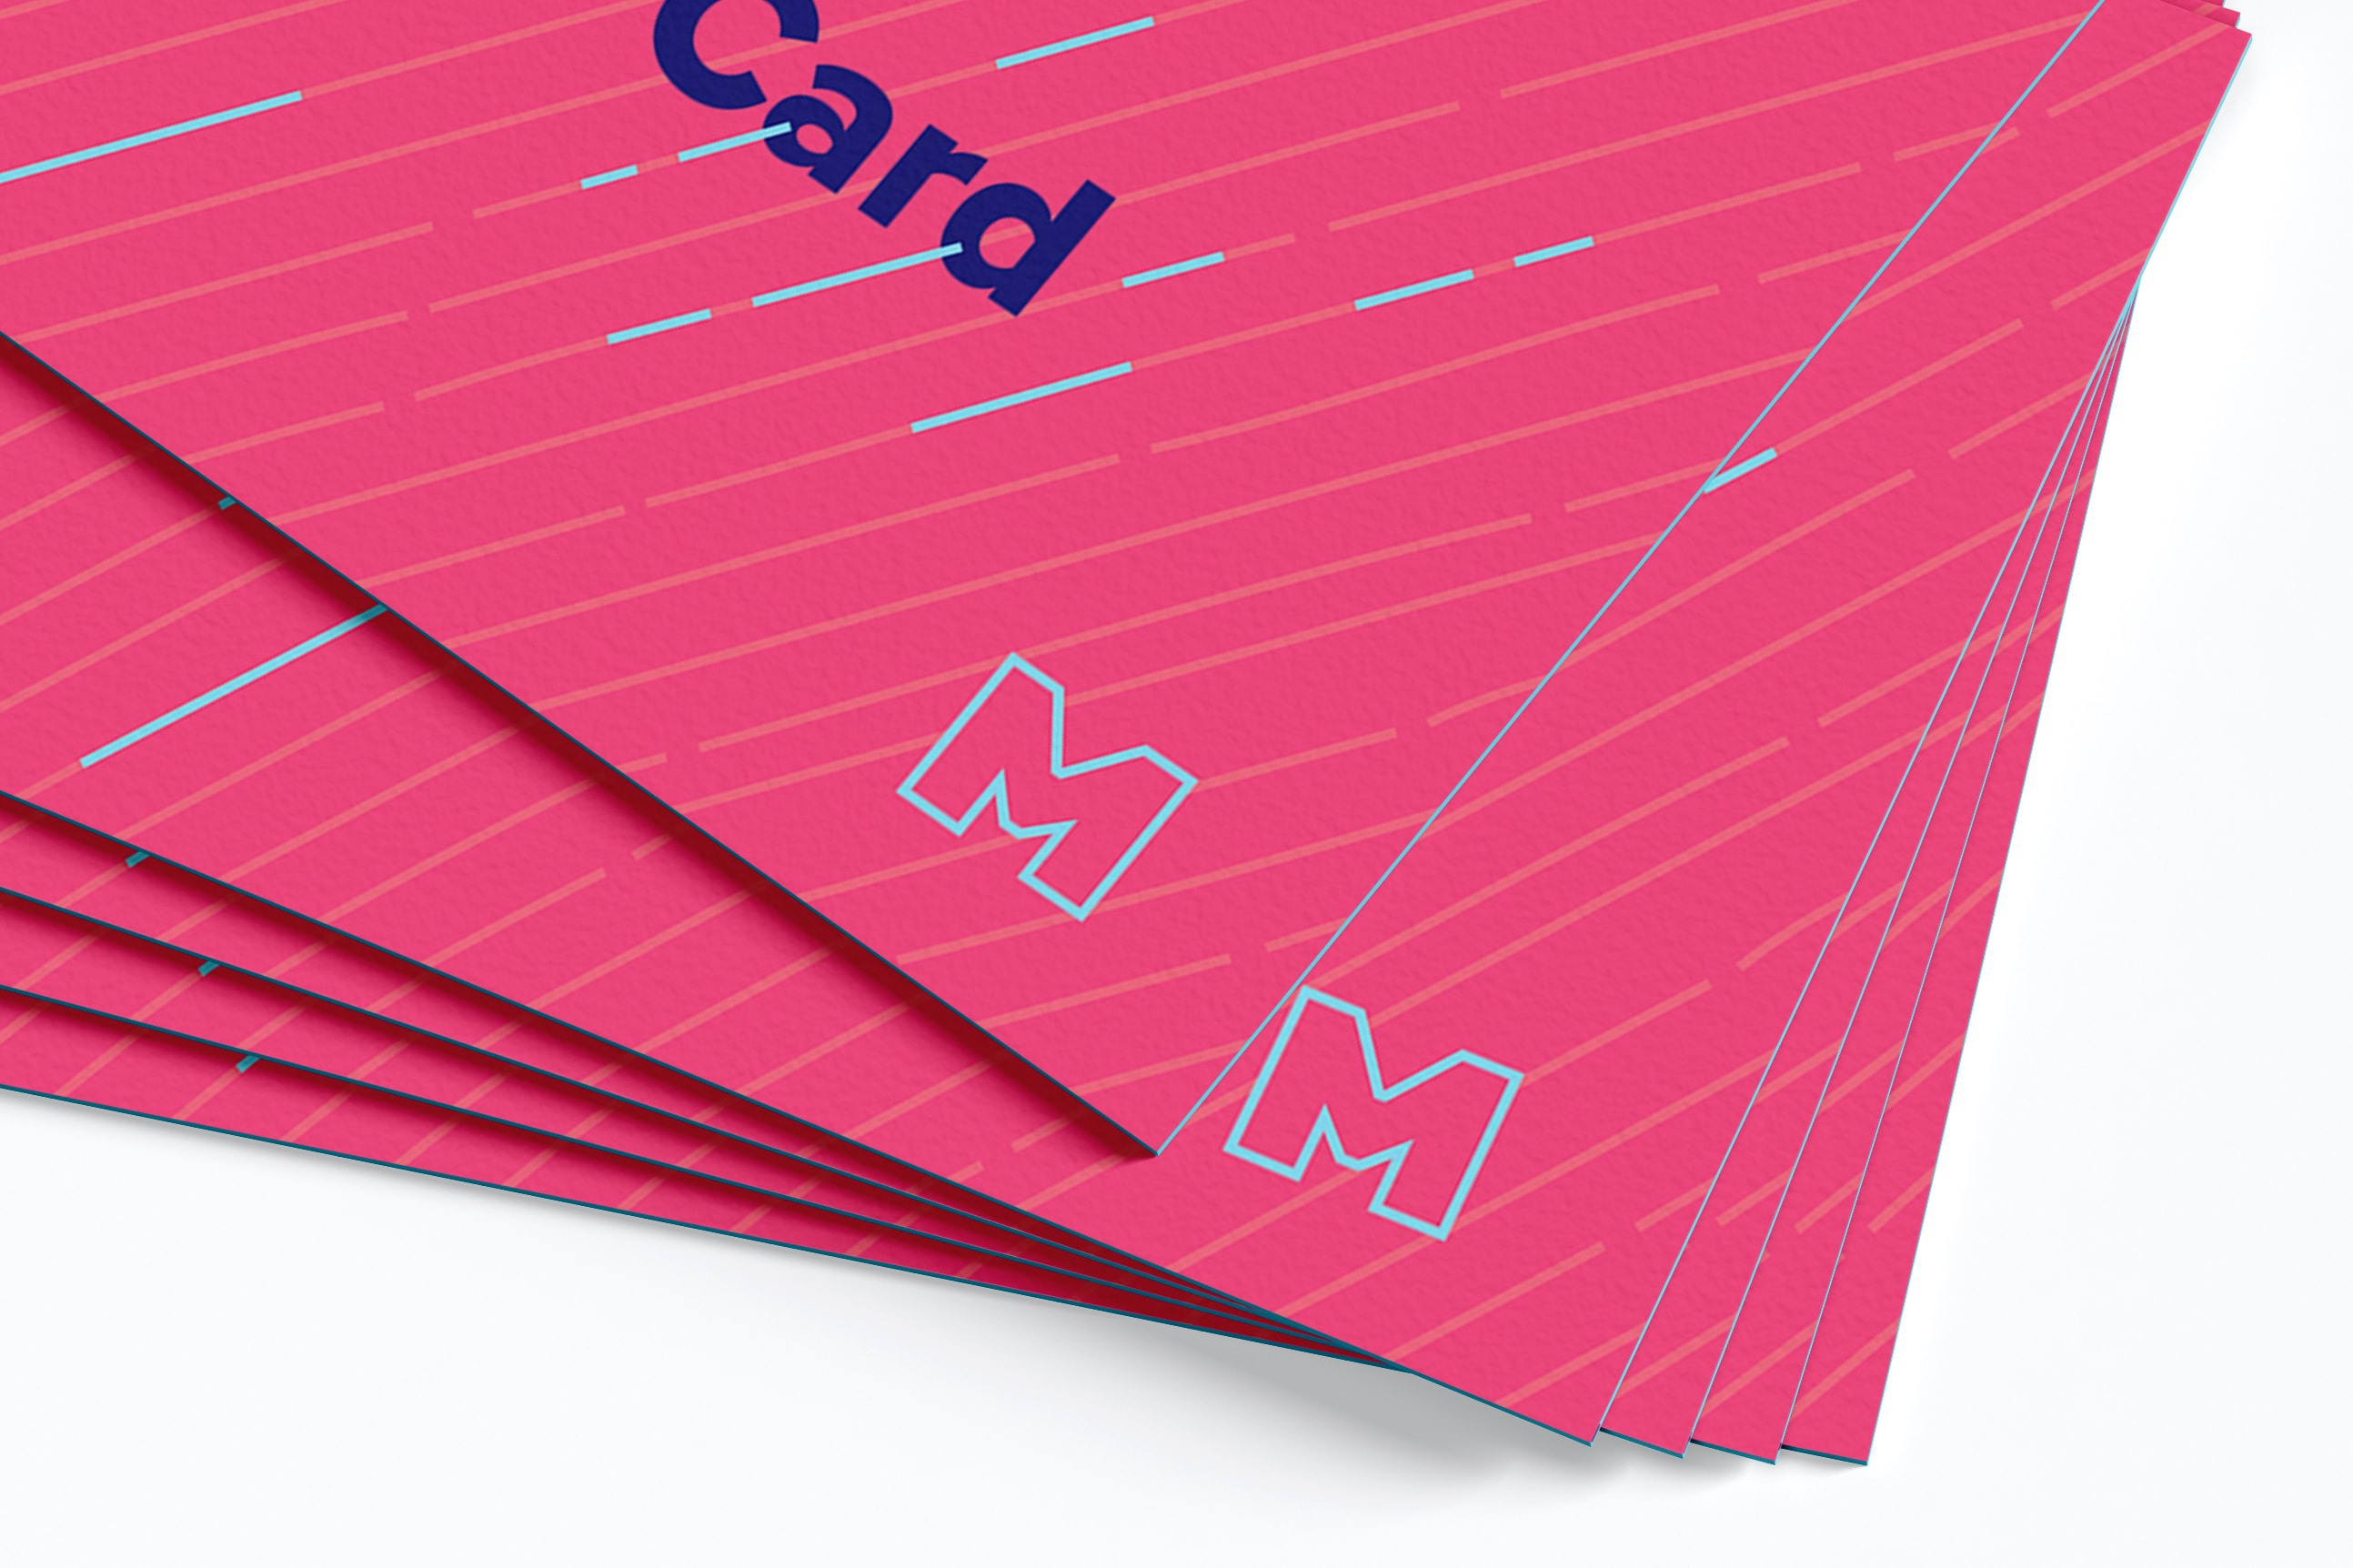 UK标准规格企业名片印刷效果图样机02 UK Business Cards Mockup 02插图1